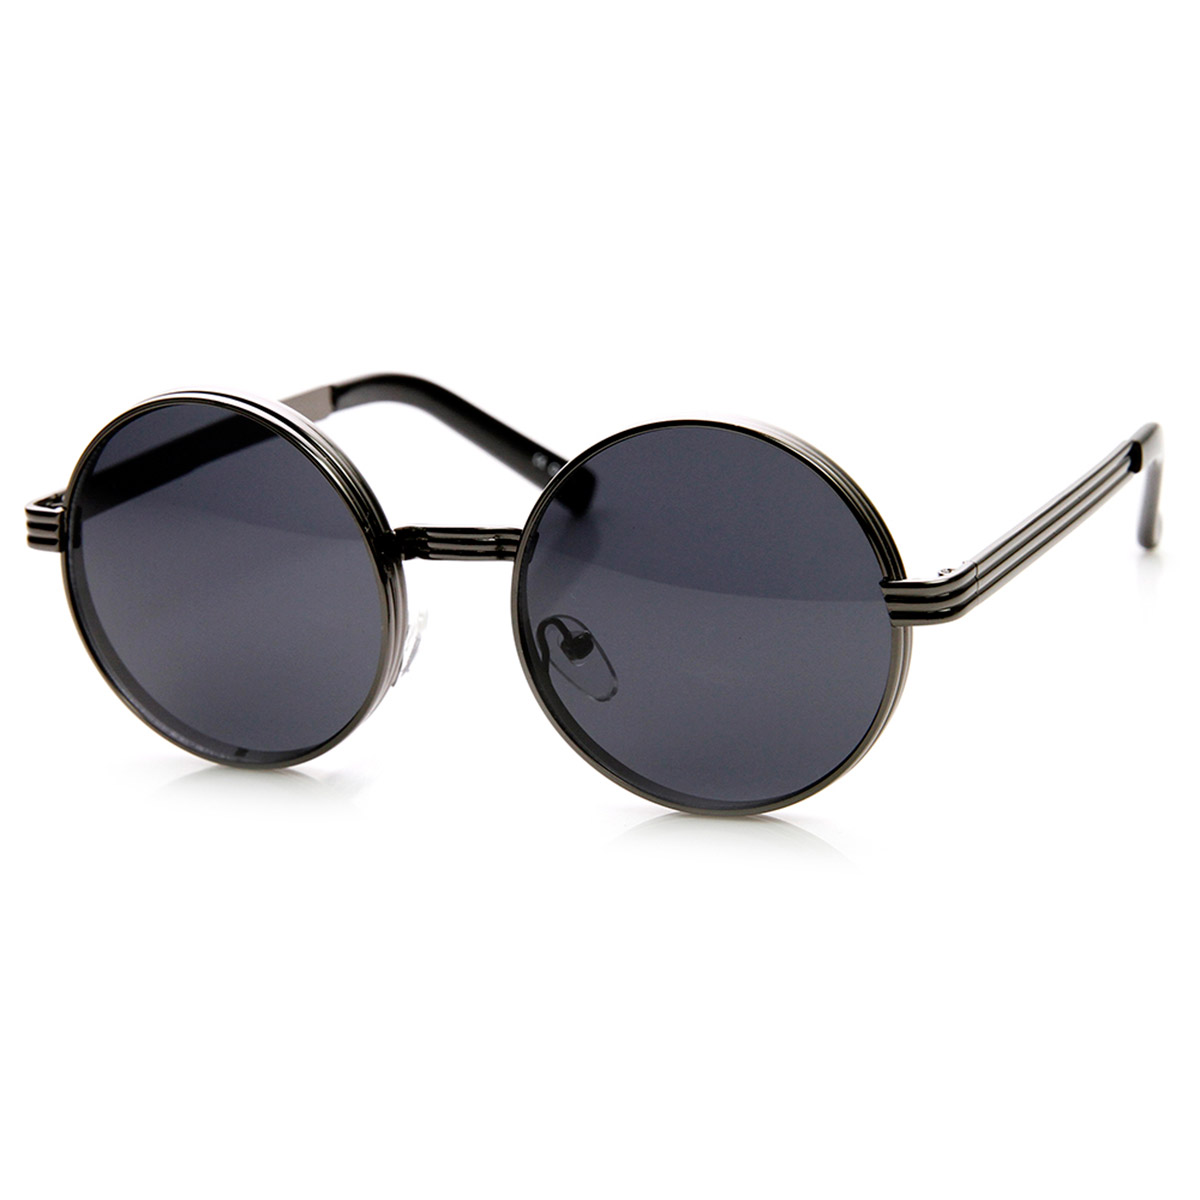 Zerouv Retro Fashion Bold Steampunk Metal Round Sunglasses Ebay 